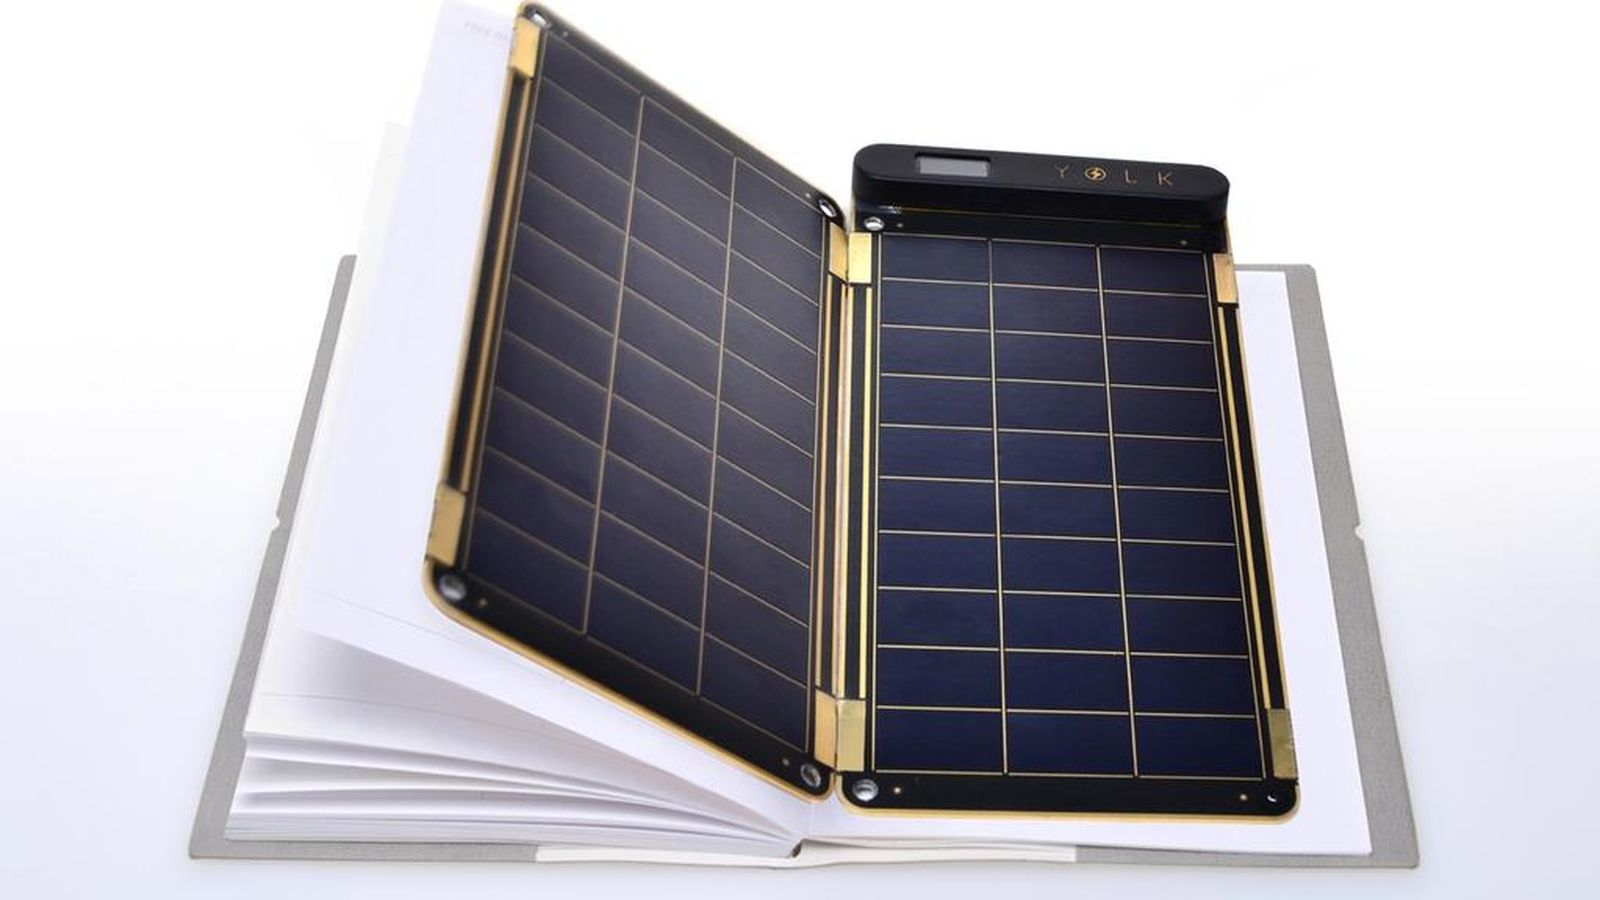 Solar Paper, un cargador solar para el móvil que cabe dentro de un